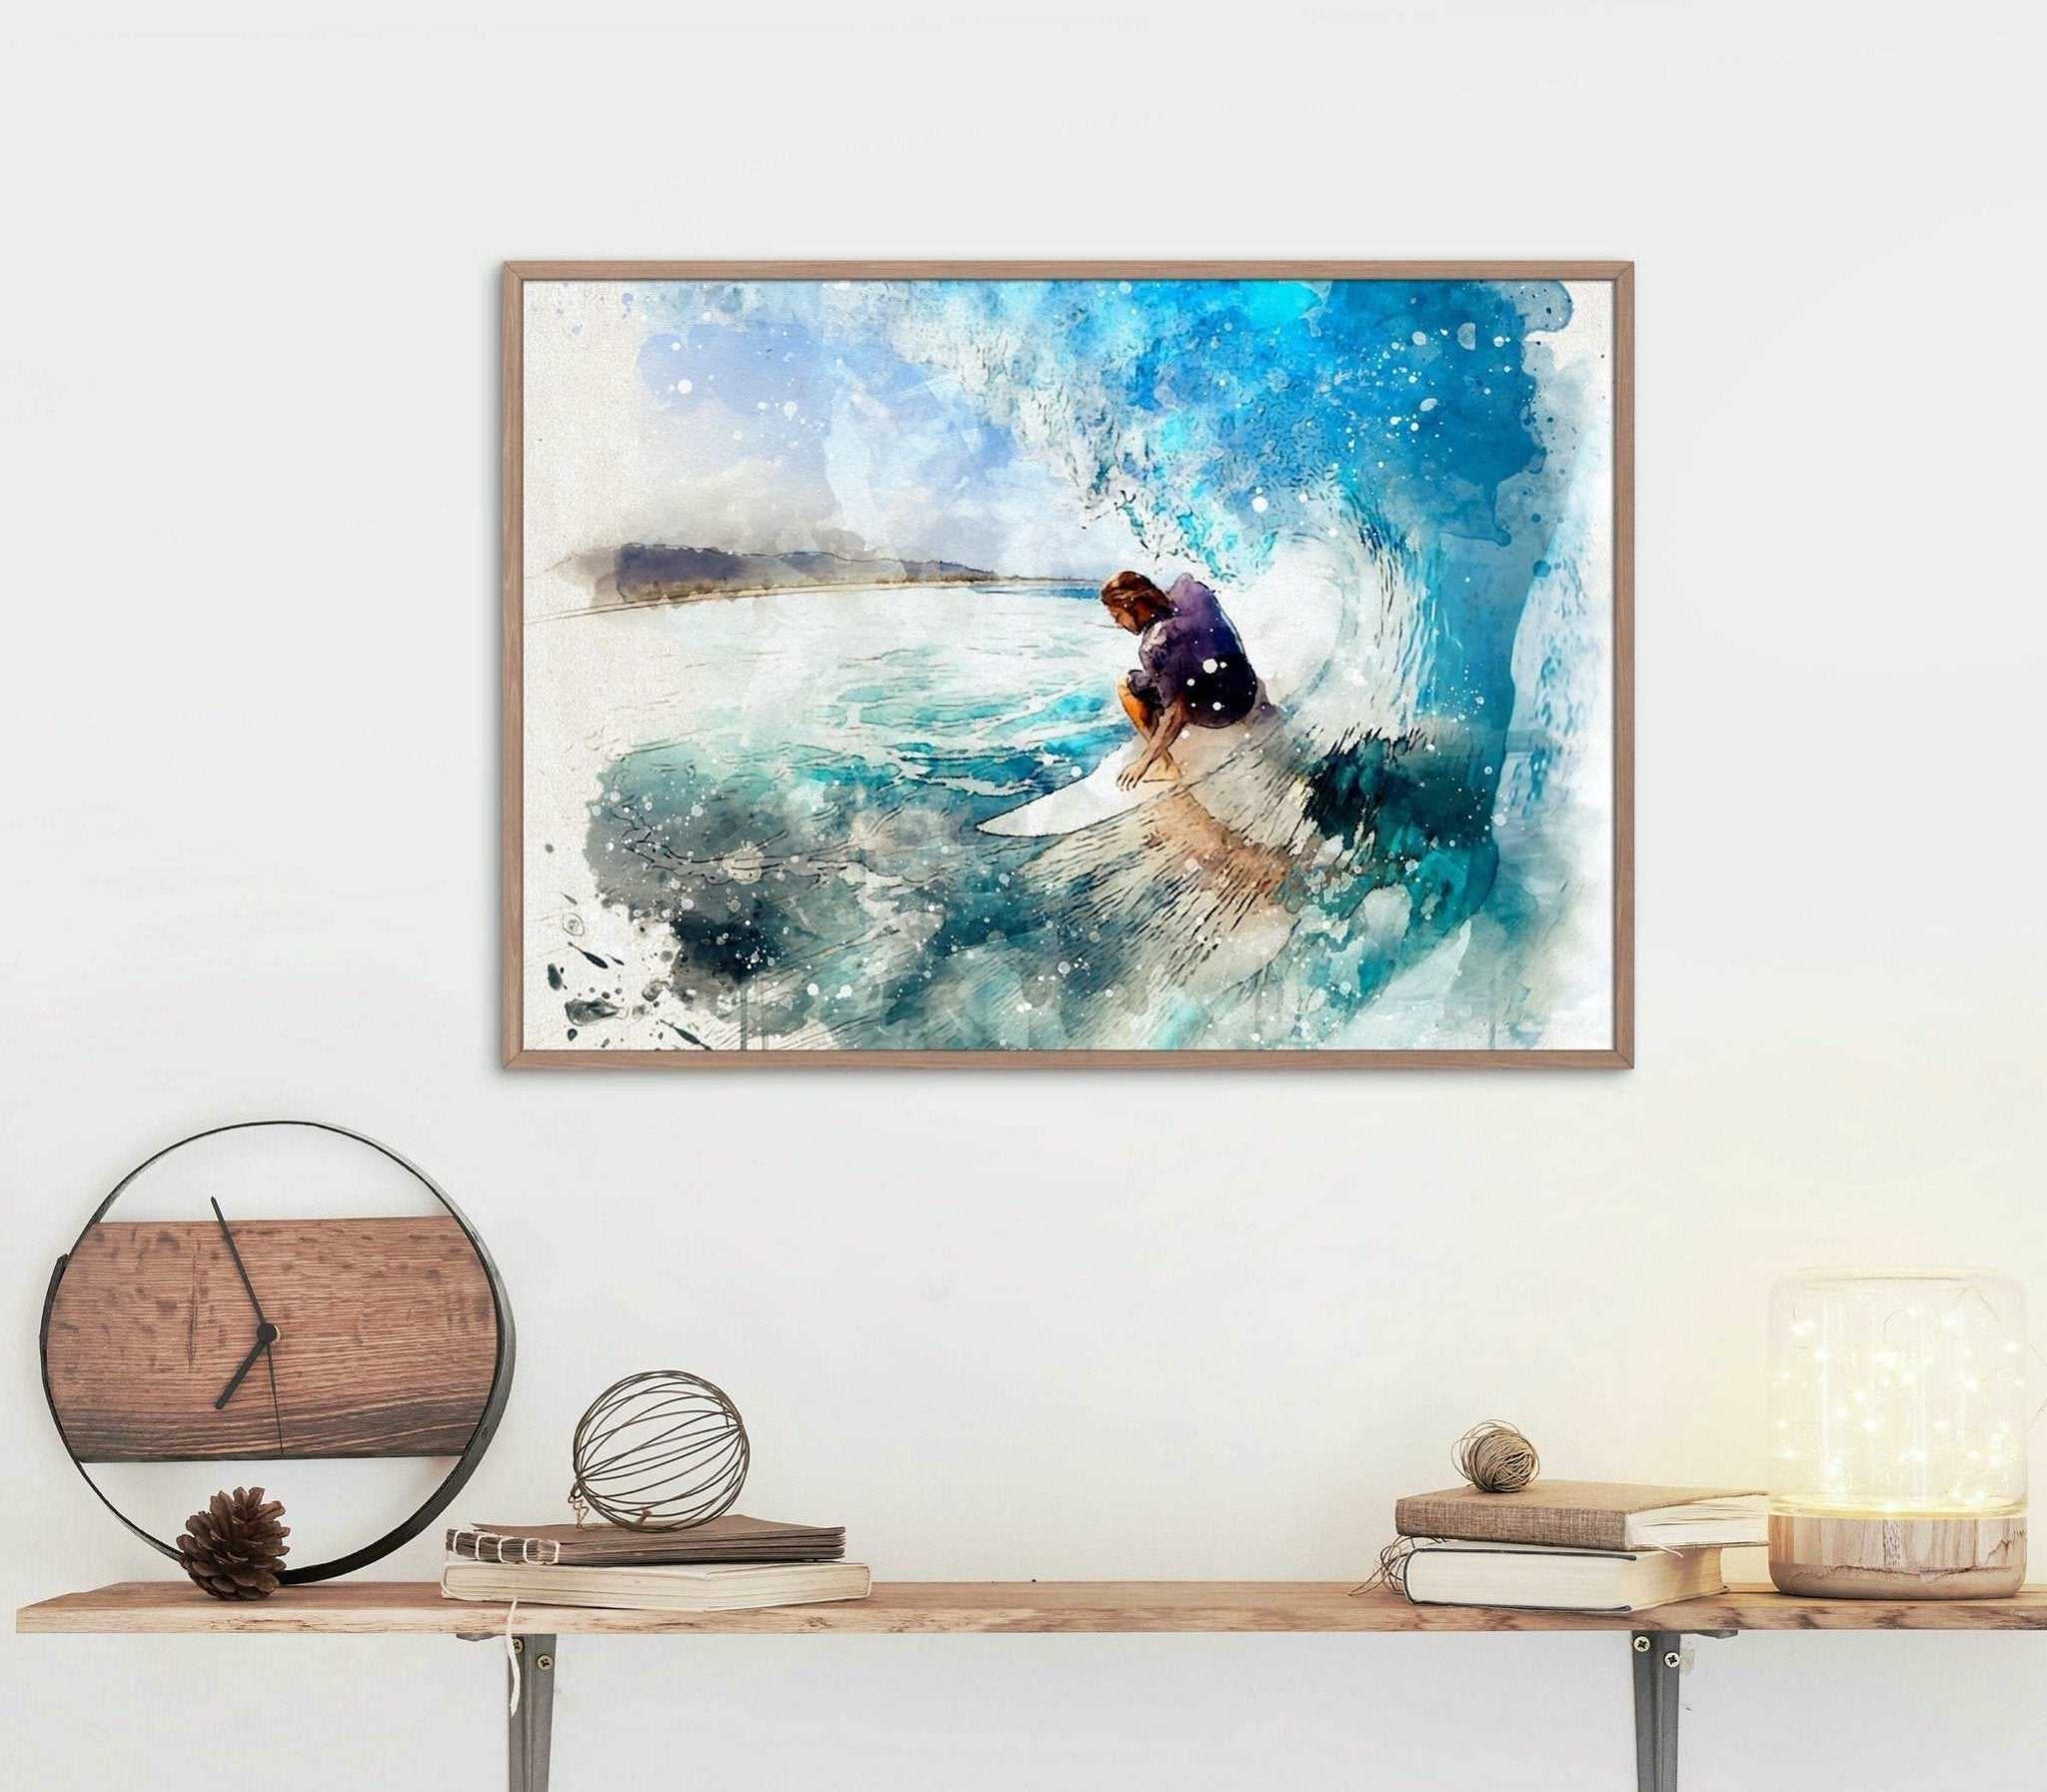 Custom Surfer Art, Custom Gift for Surfer, Surf Poster, Custom Surfer Painting, Personalized Surfer Portrait from Photo - FromPicToArt